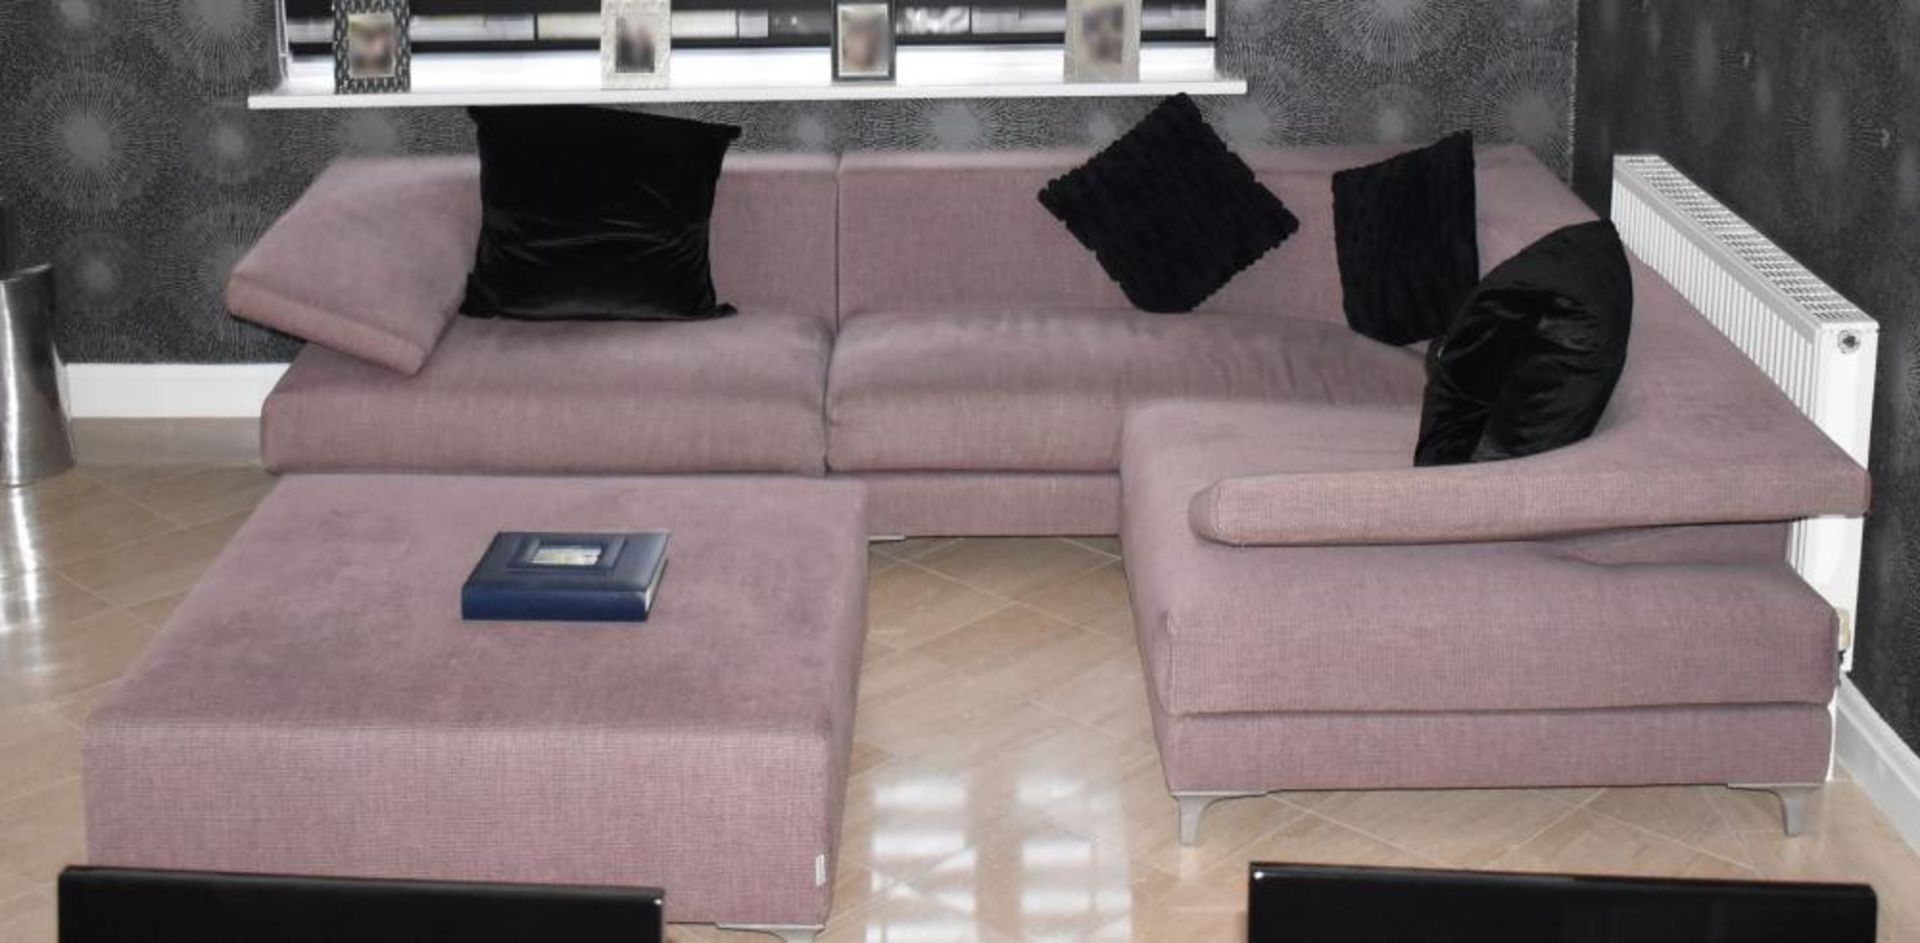 1 x SWAN Italia Corner Sofa and Ottoman finished in Light Purple - CL469 - Location: Prestwich M25 -